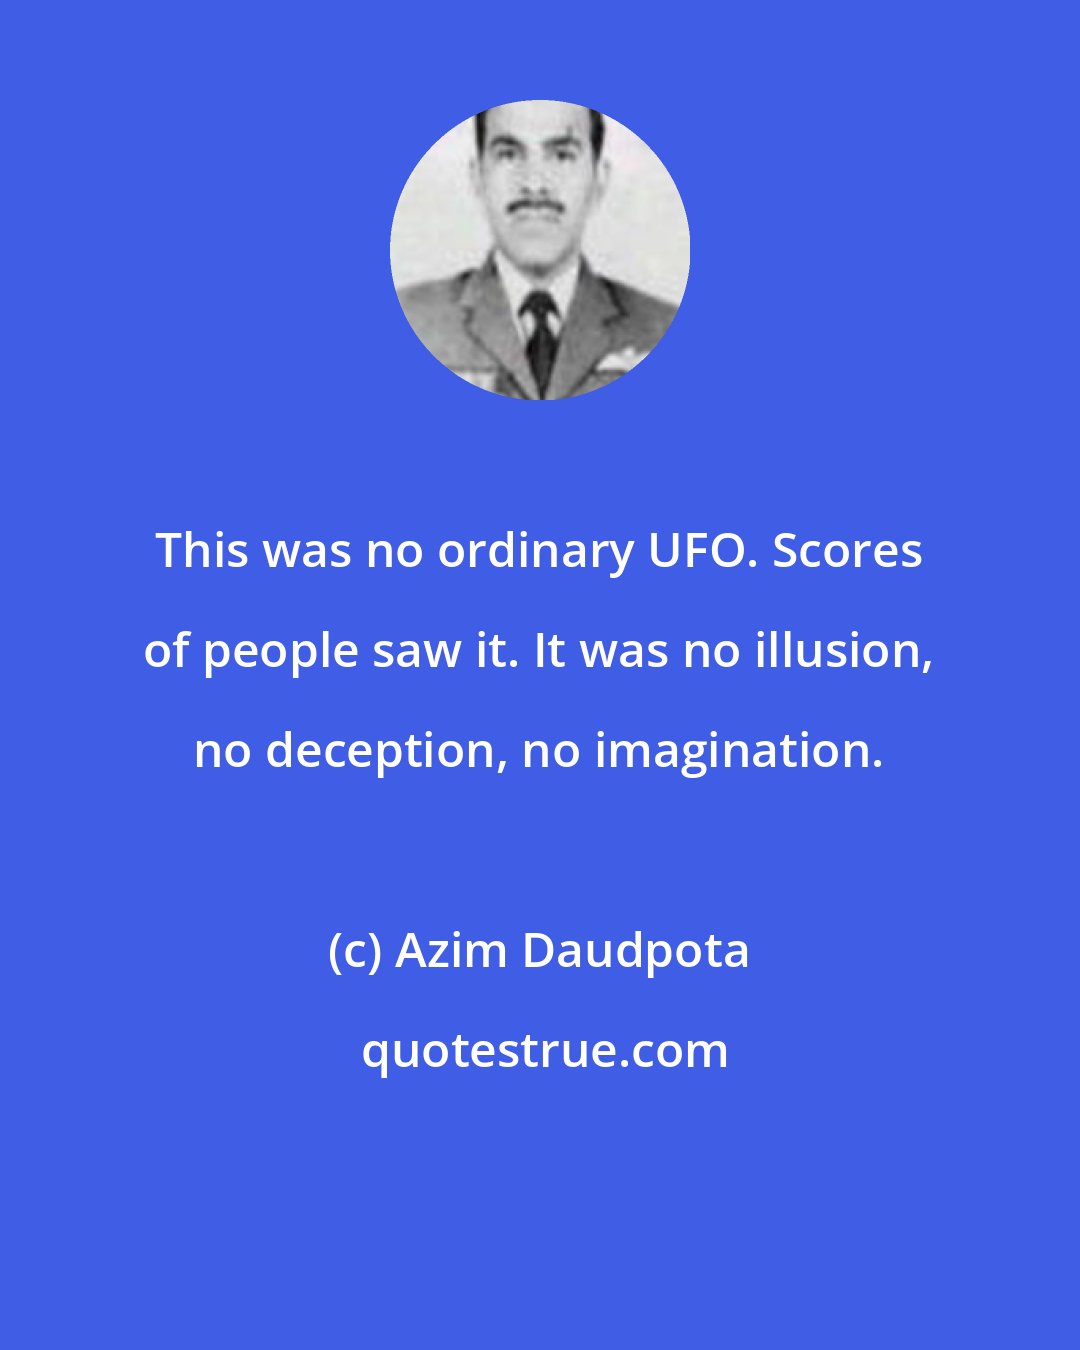 Azim Daudpota: This was no ordinary UFO. Scores of people saw it. It was no illusion, no deception, no imagination.